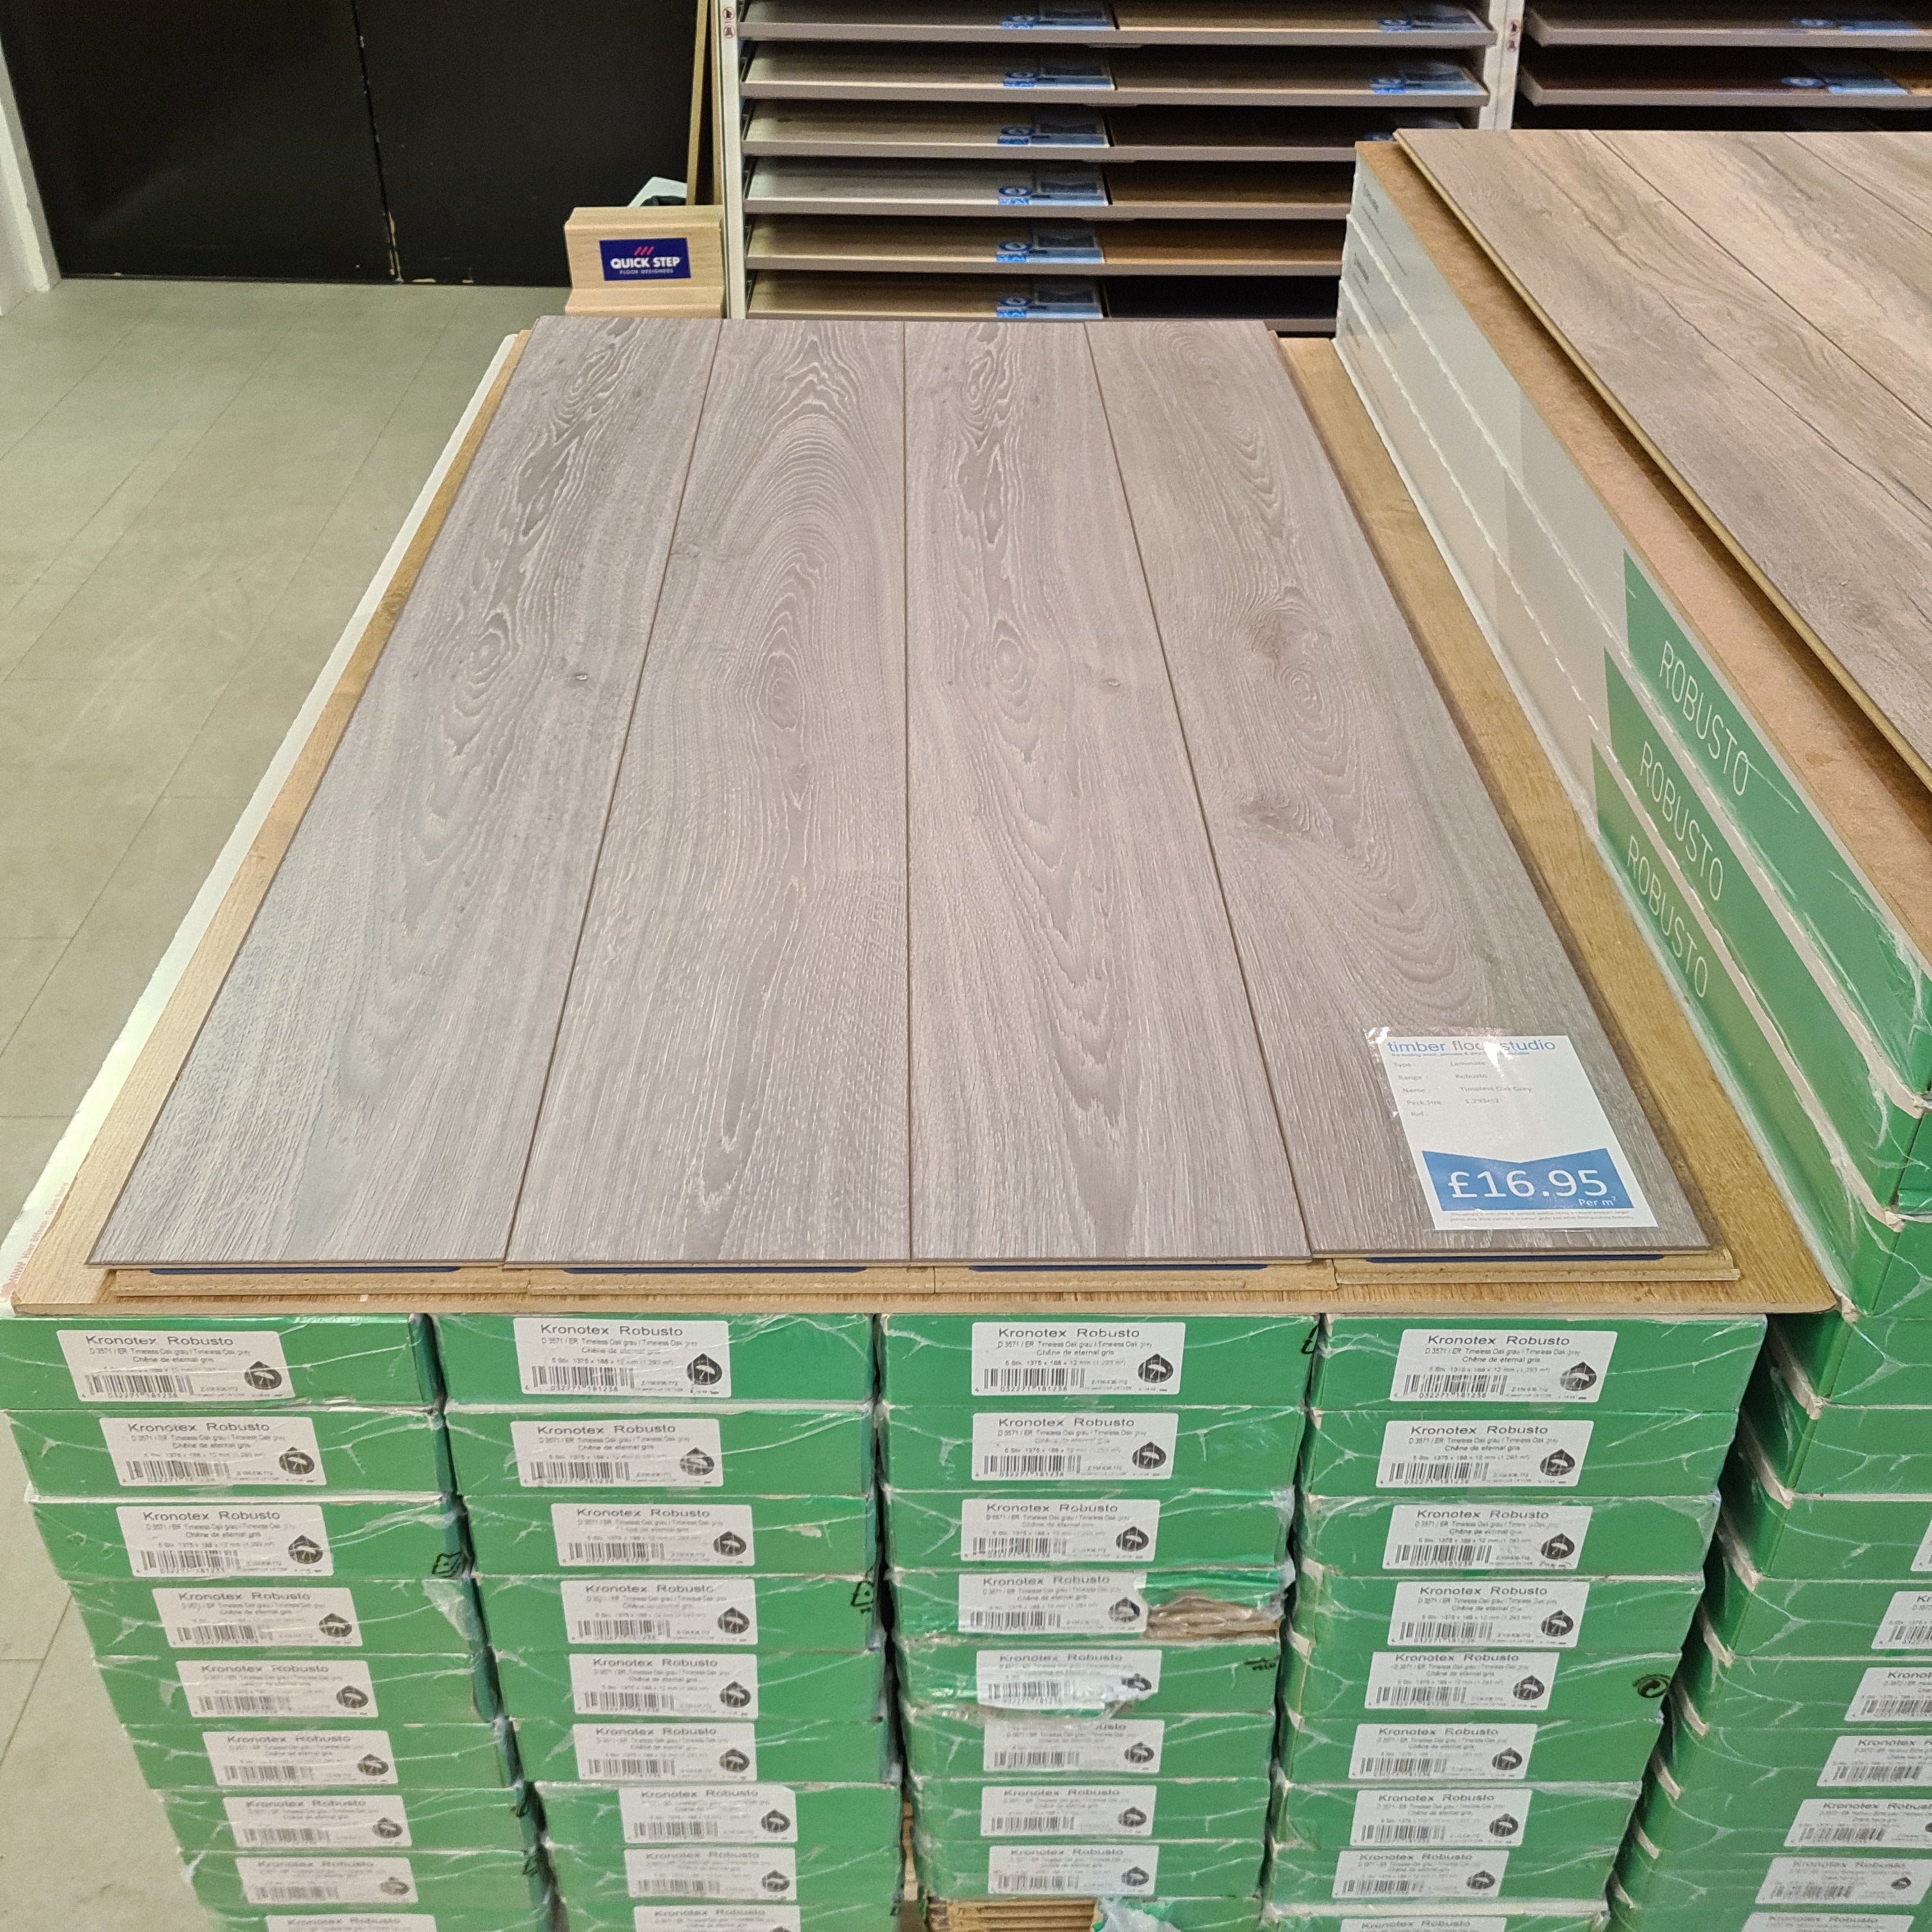 Kronotex Robusto Timeless Oak Grey Laminate Flooring  £16.95m2